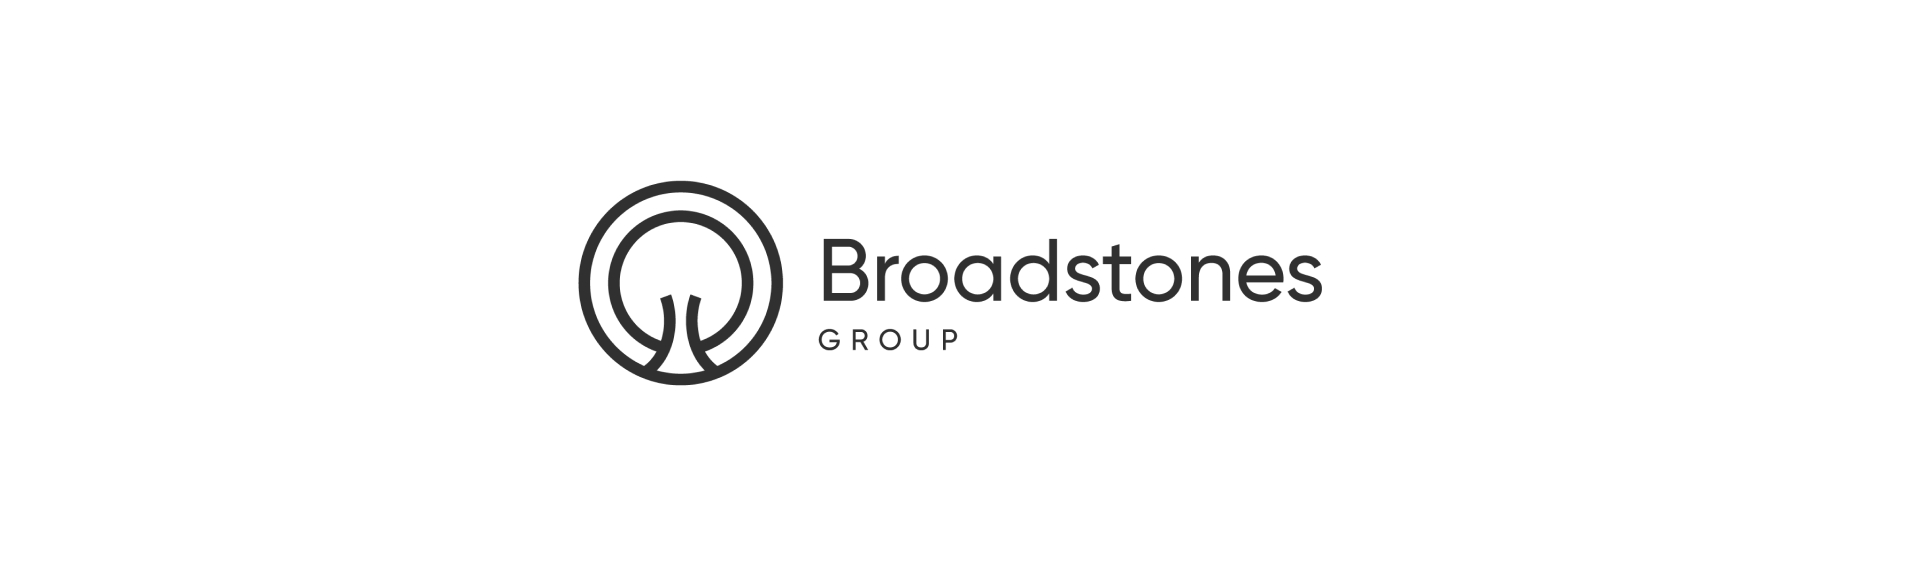 Broadstones Group Logo